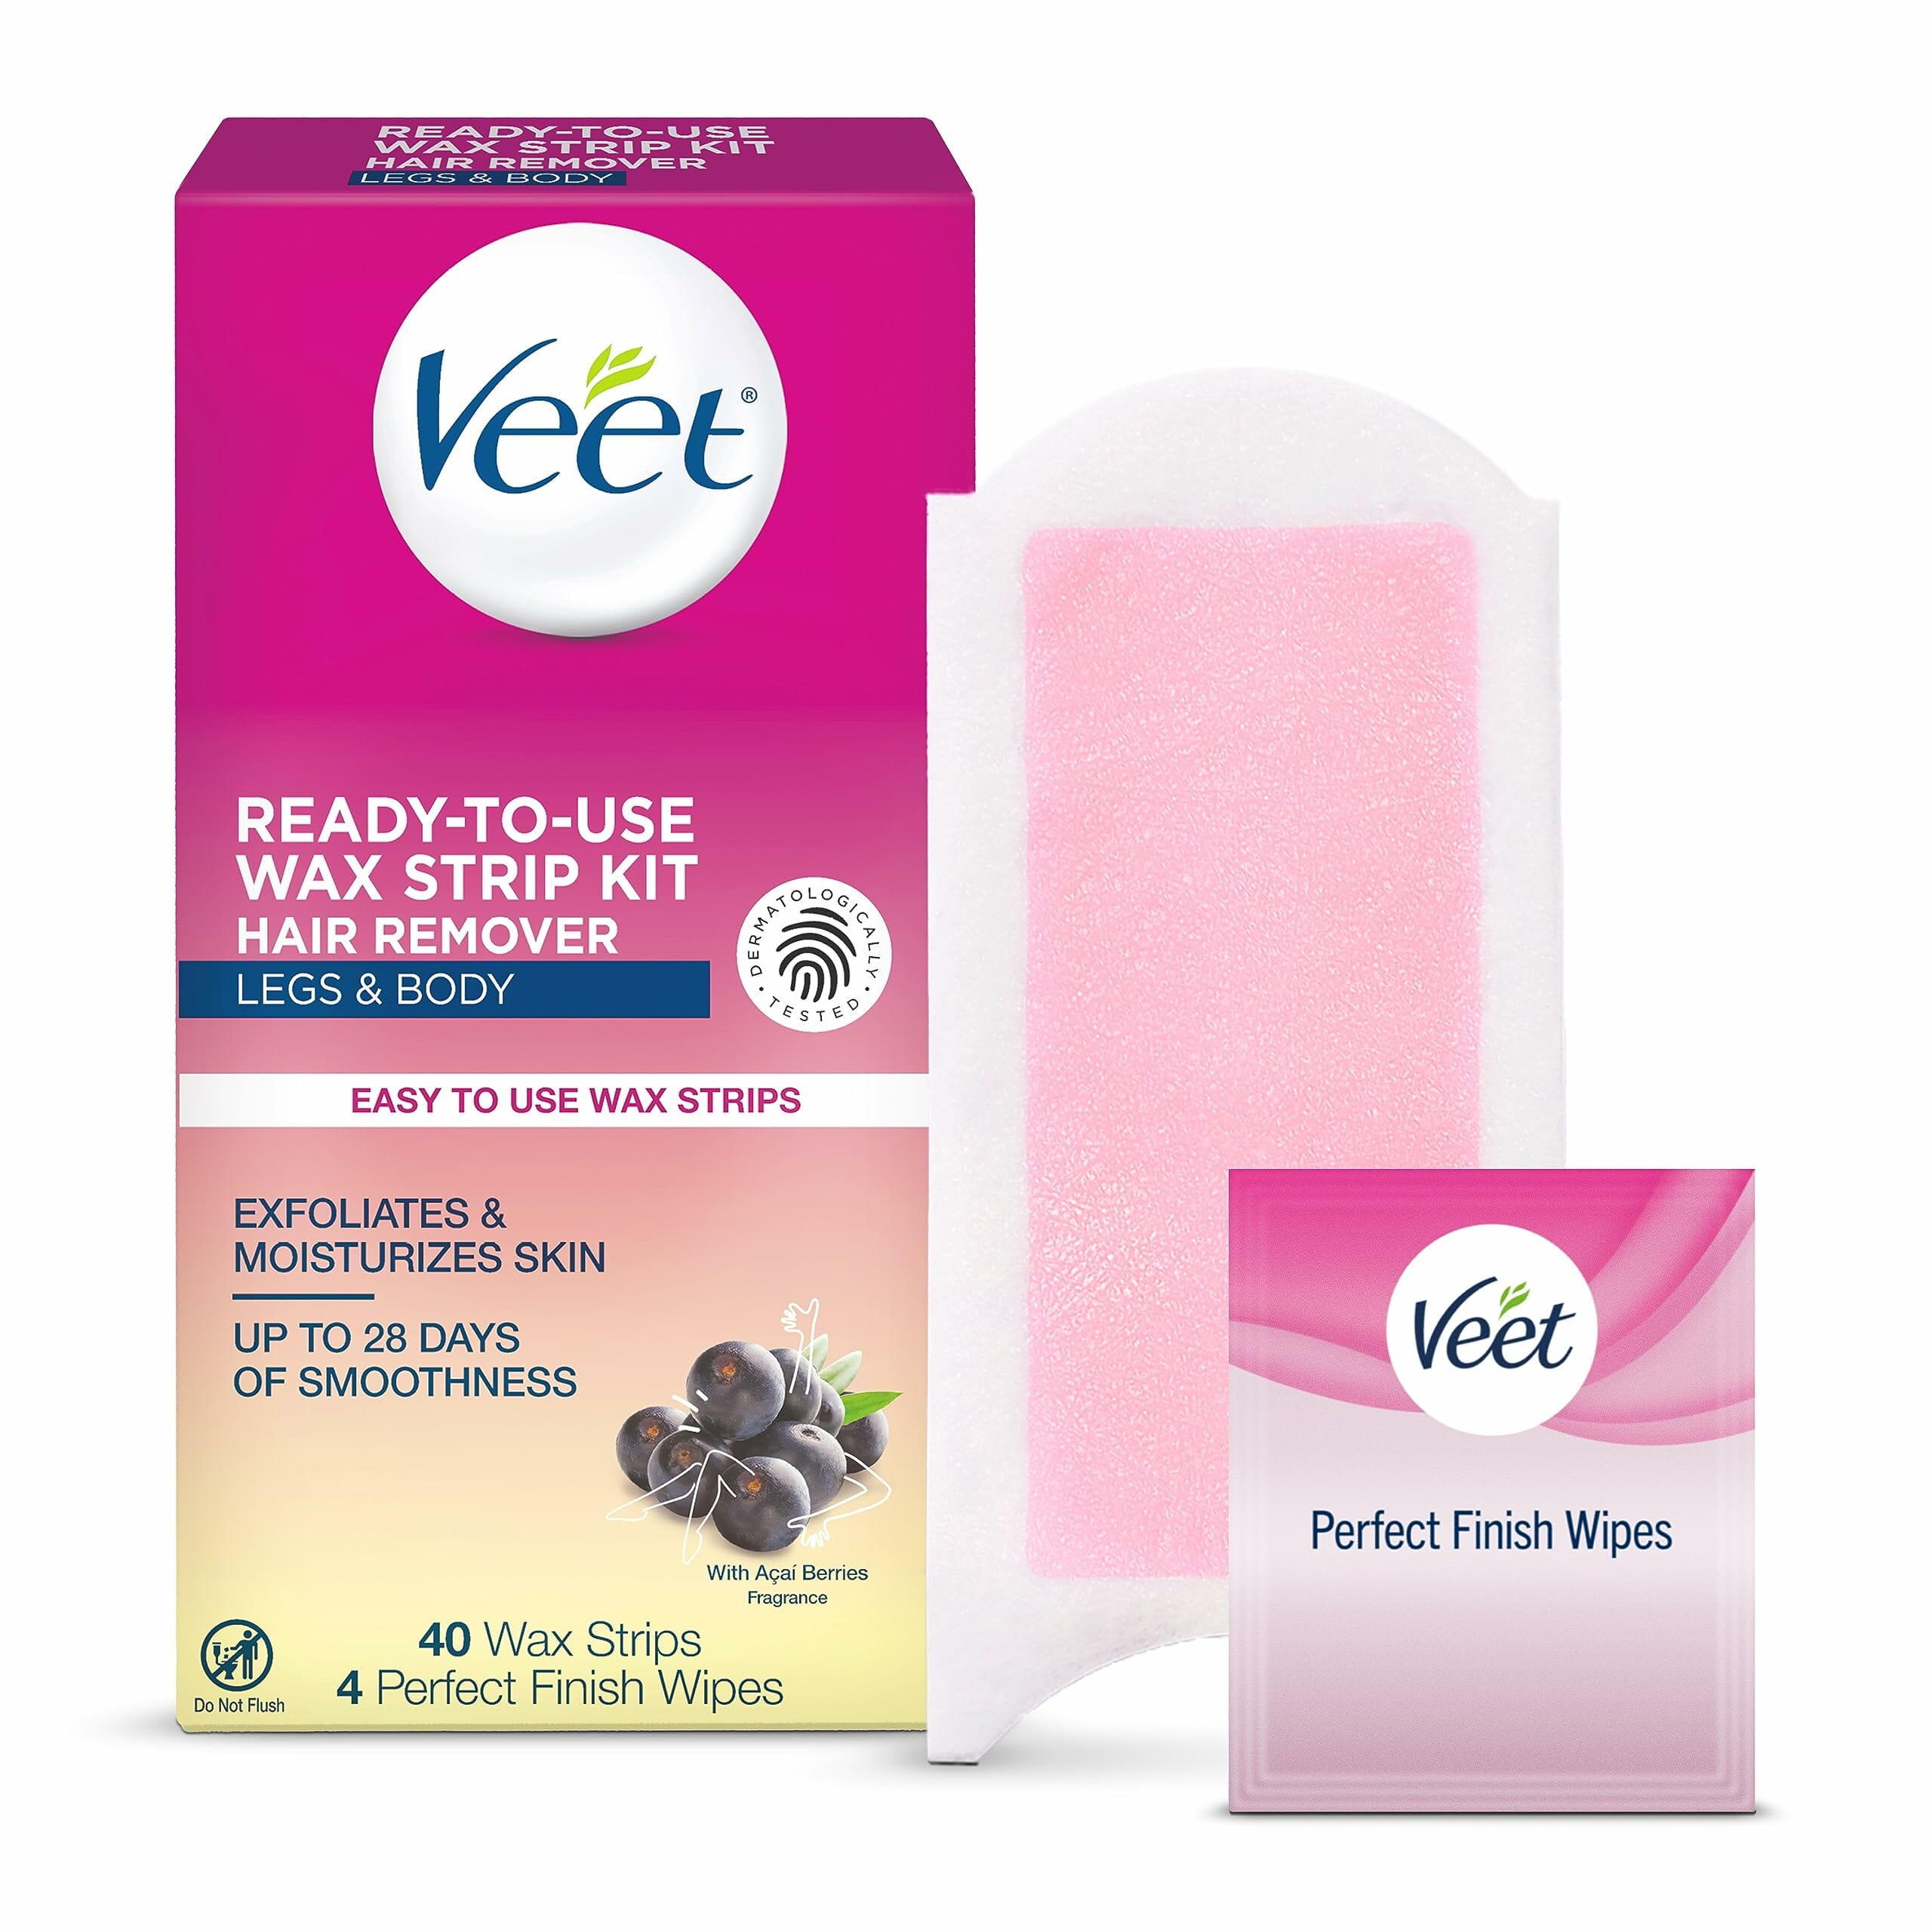 Veet ready-to-use wax strip kit